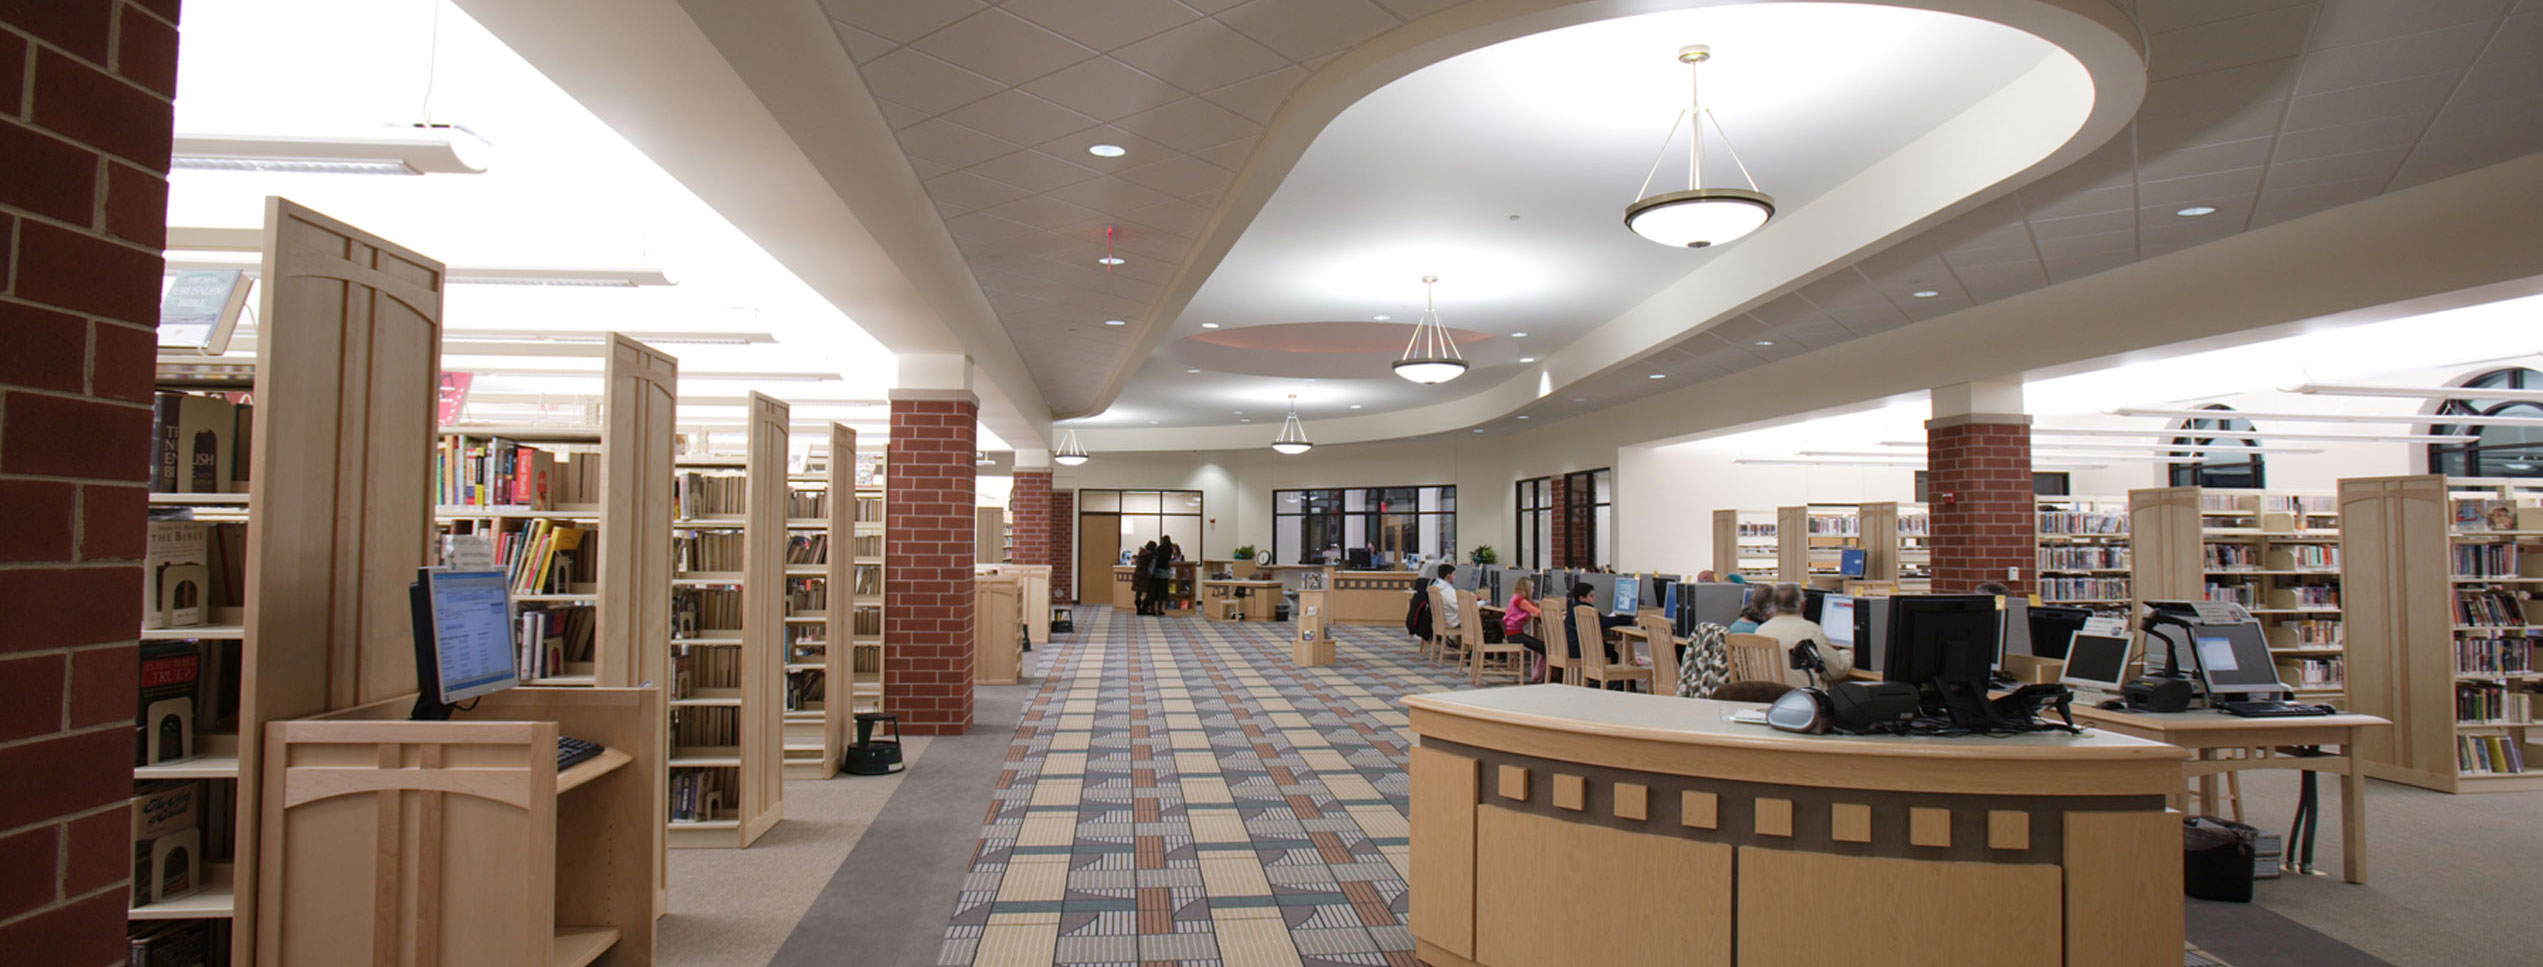 Eisenhower Public Library